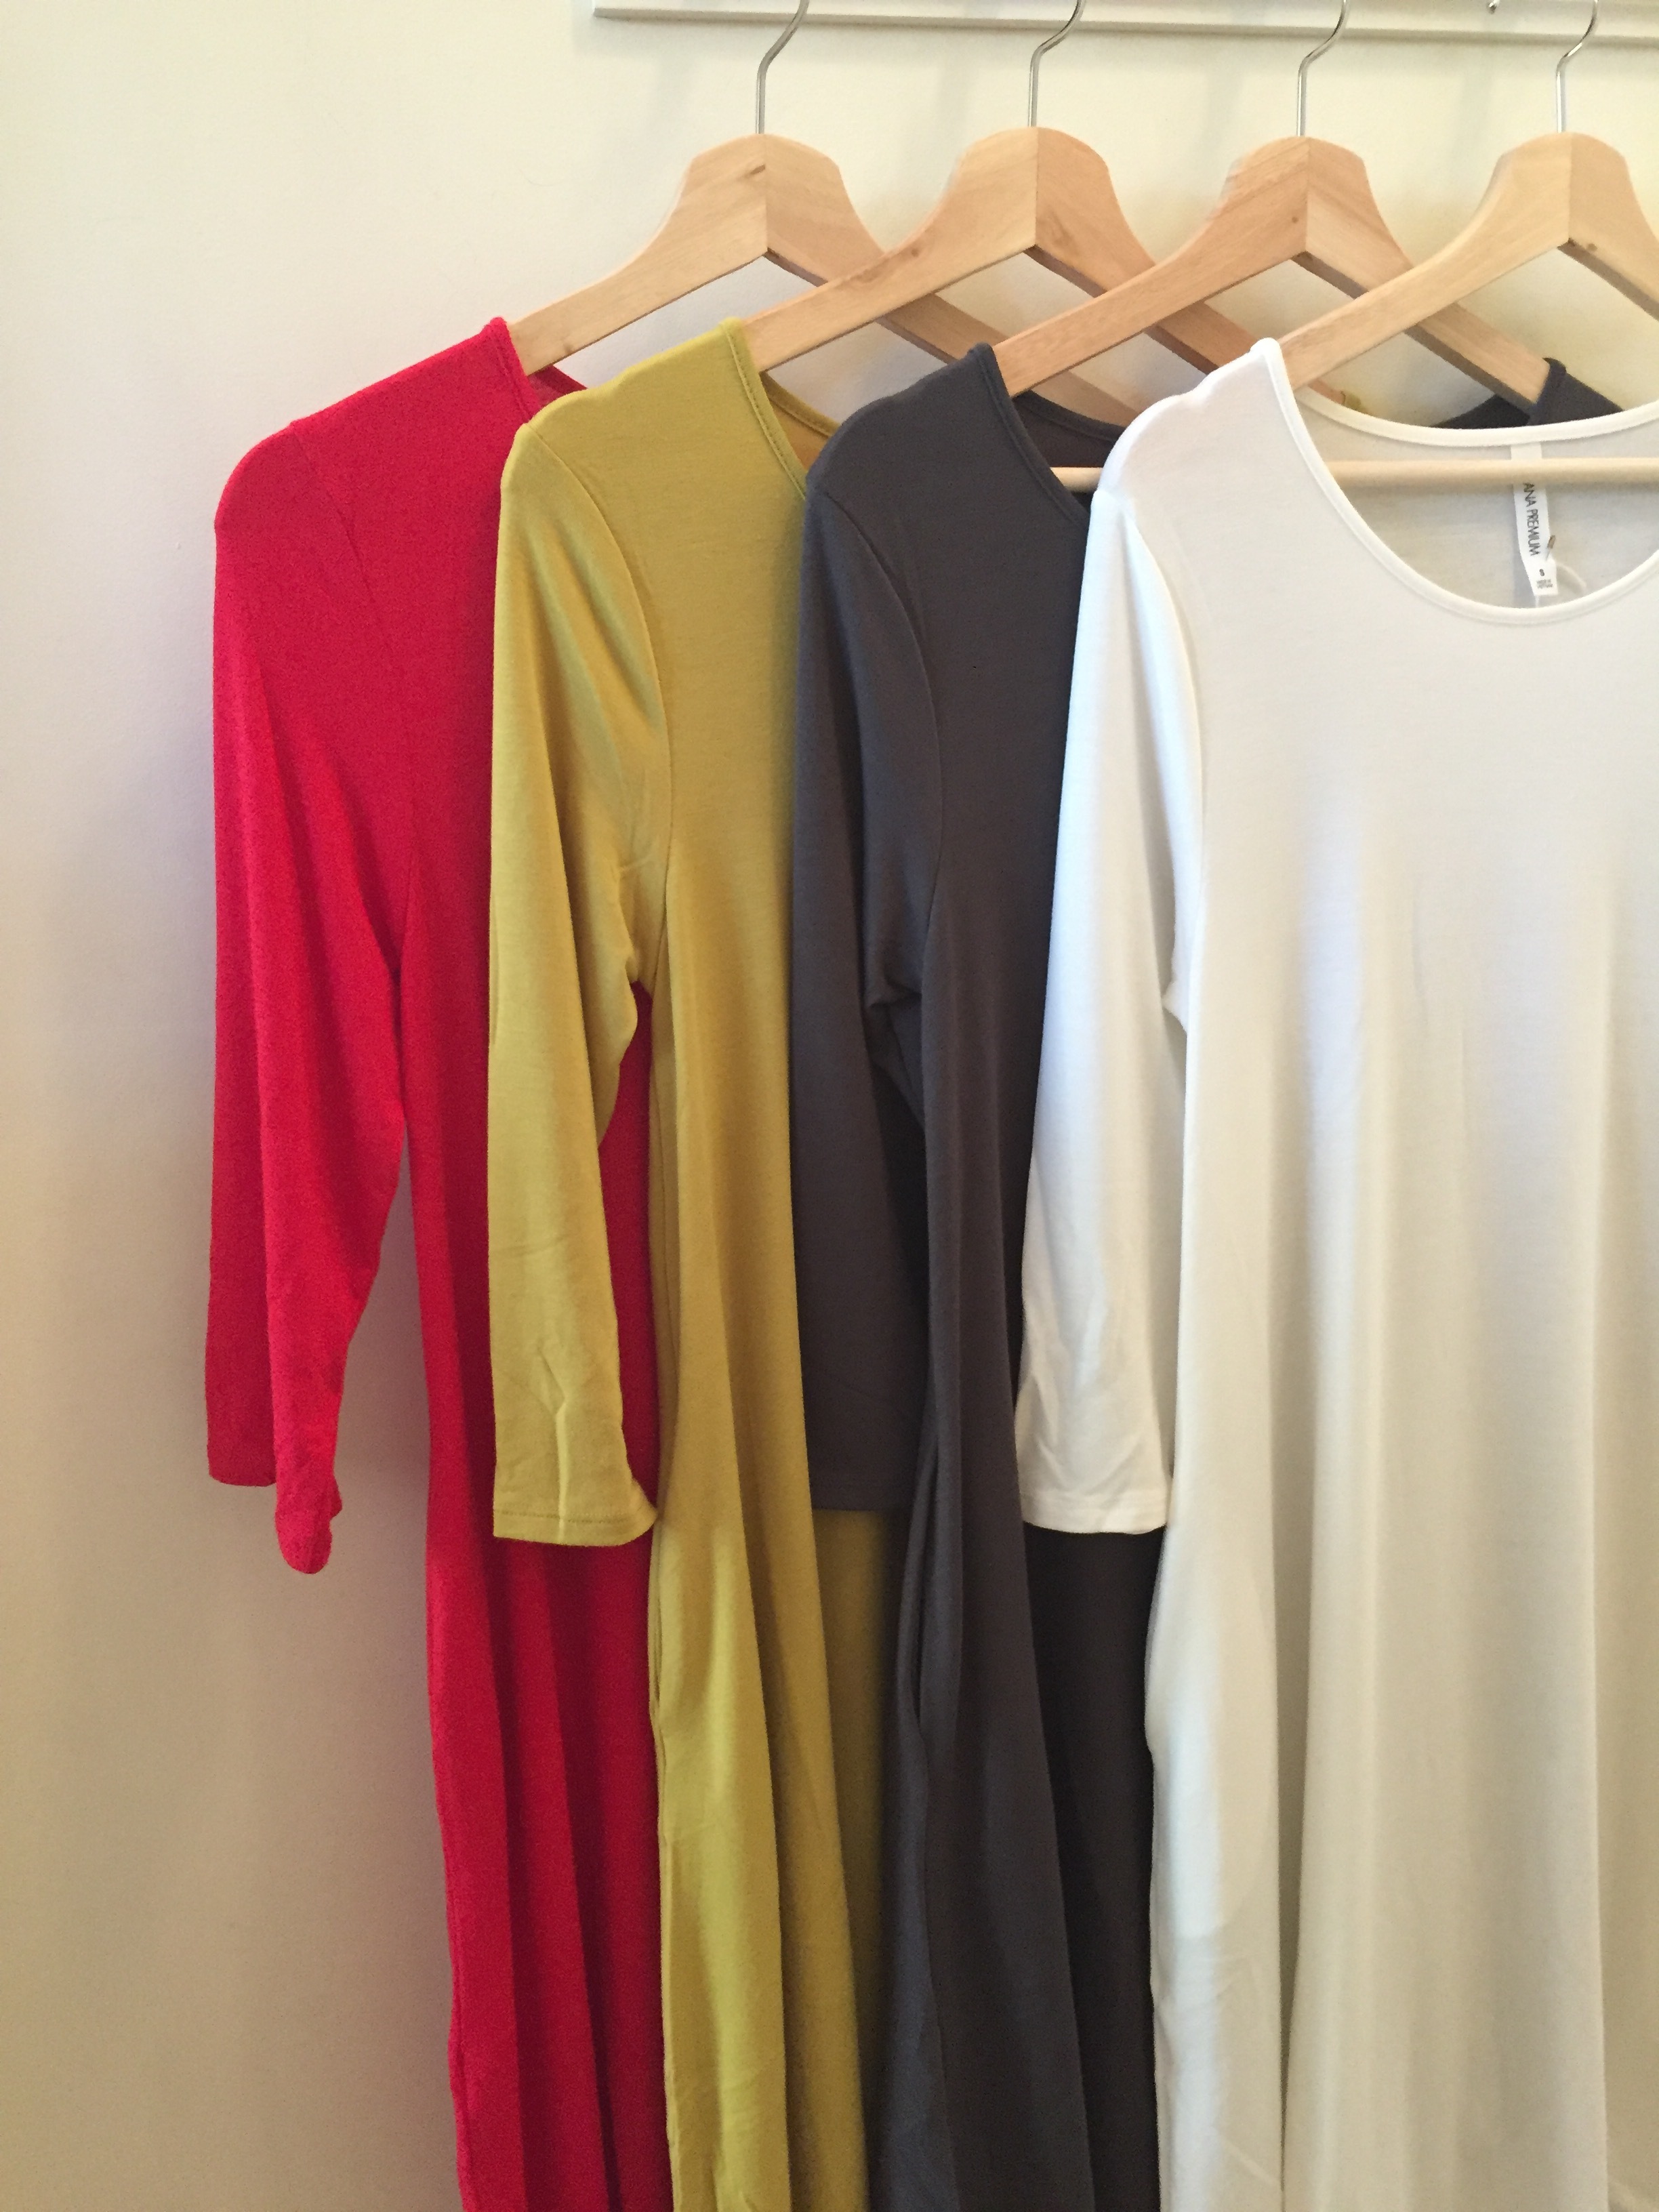 Round Hem Dress (Variety of colors $26)